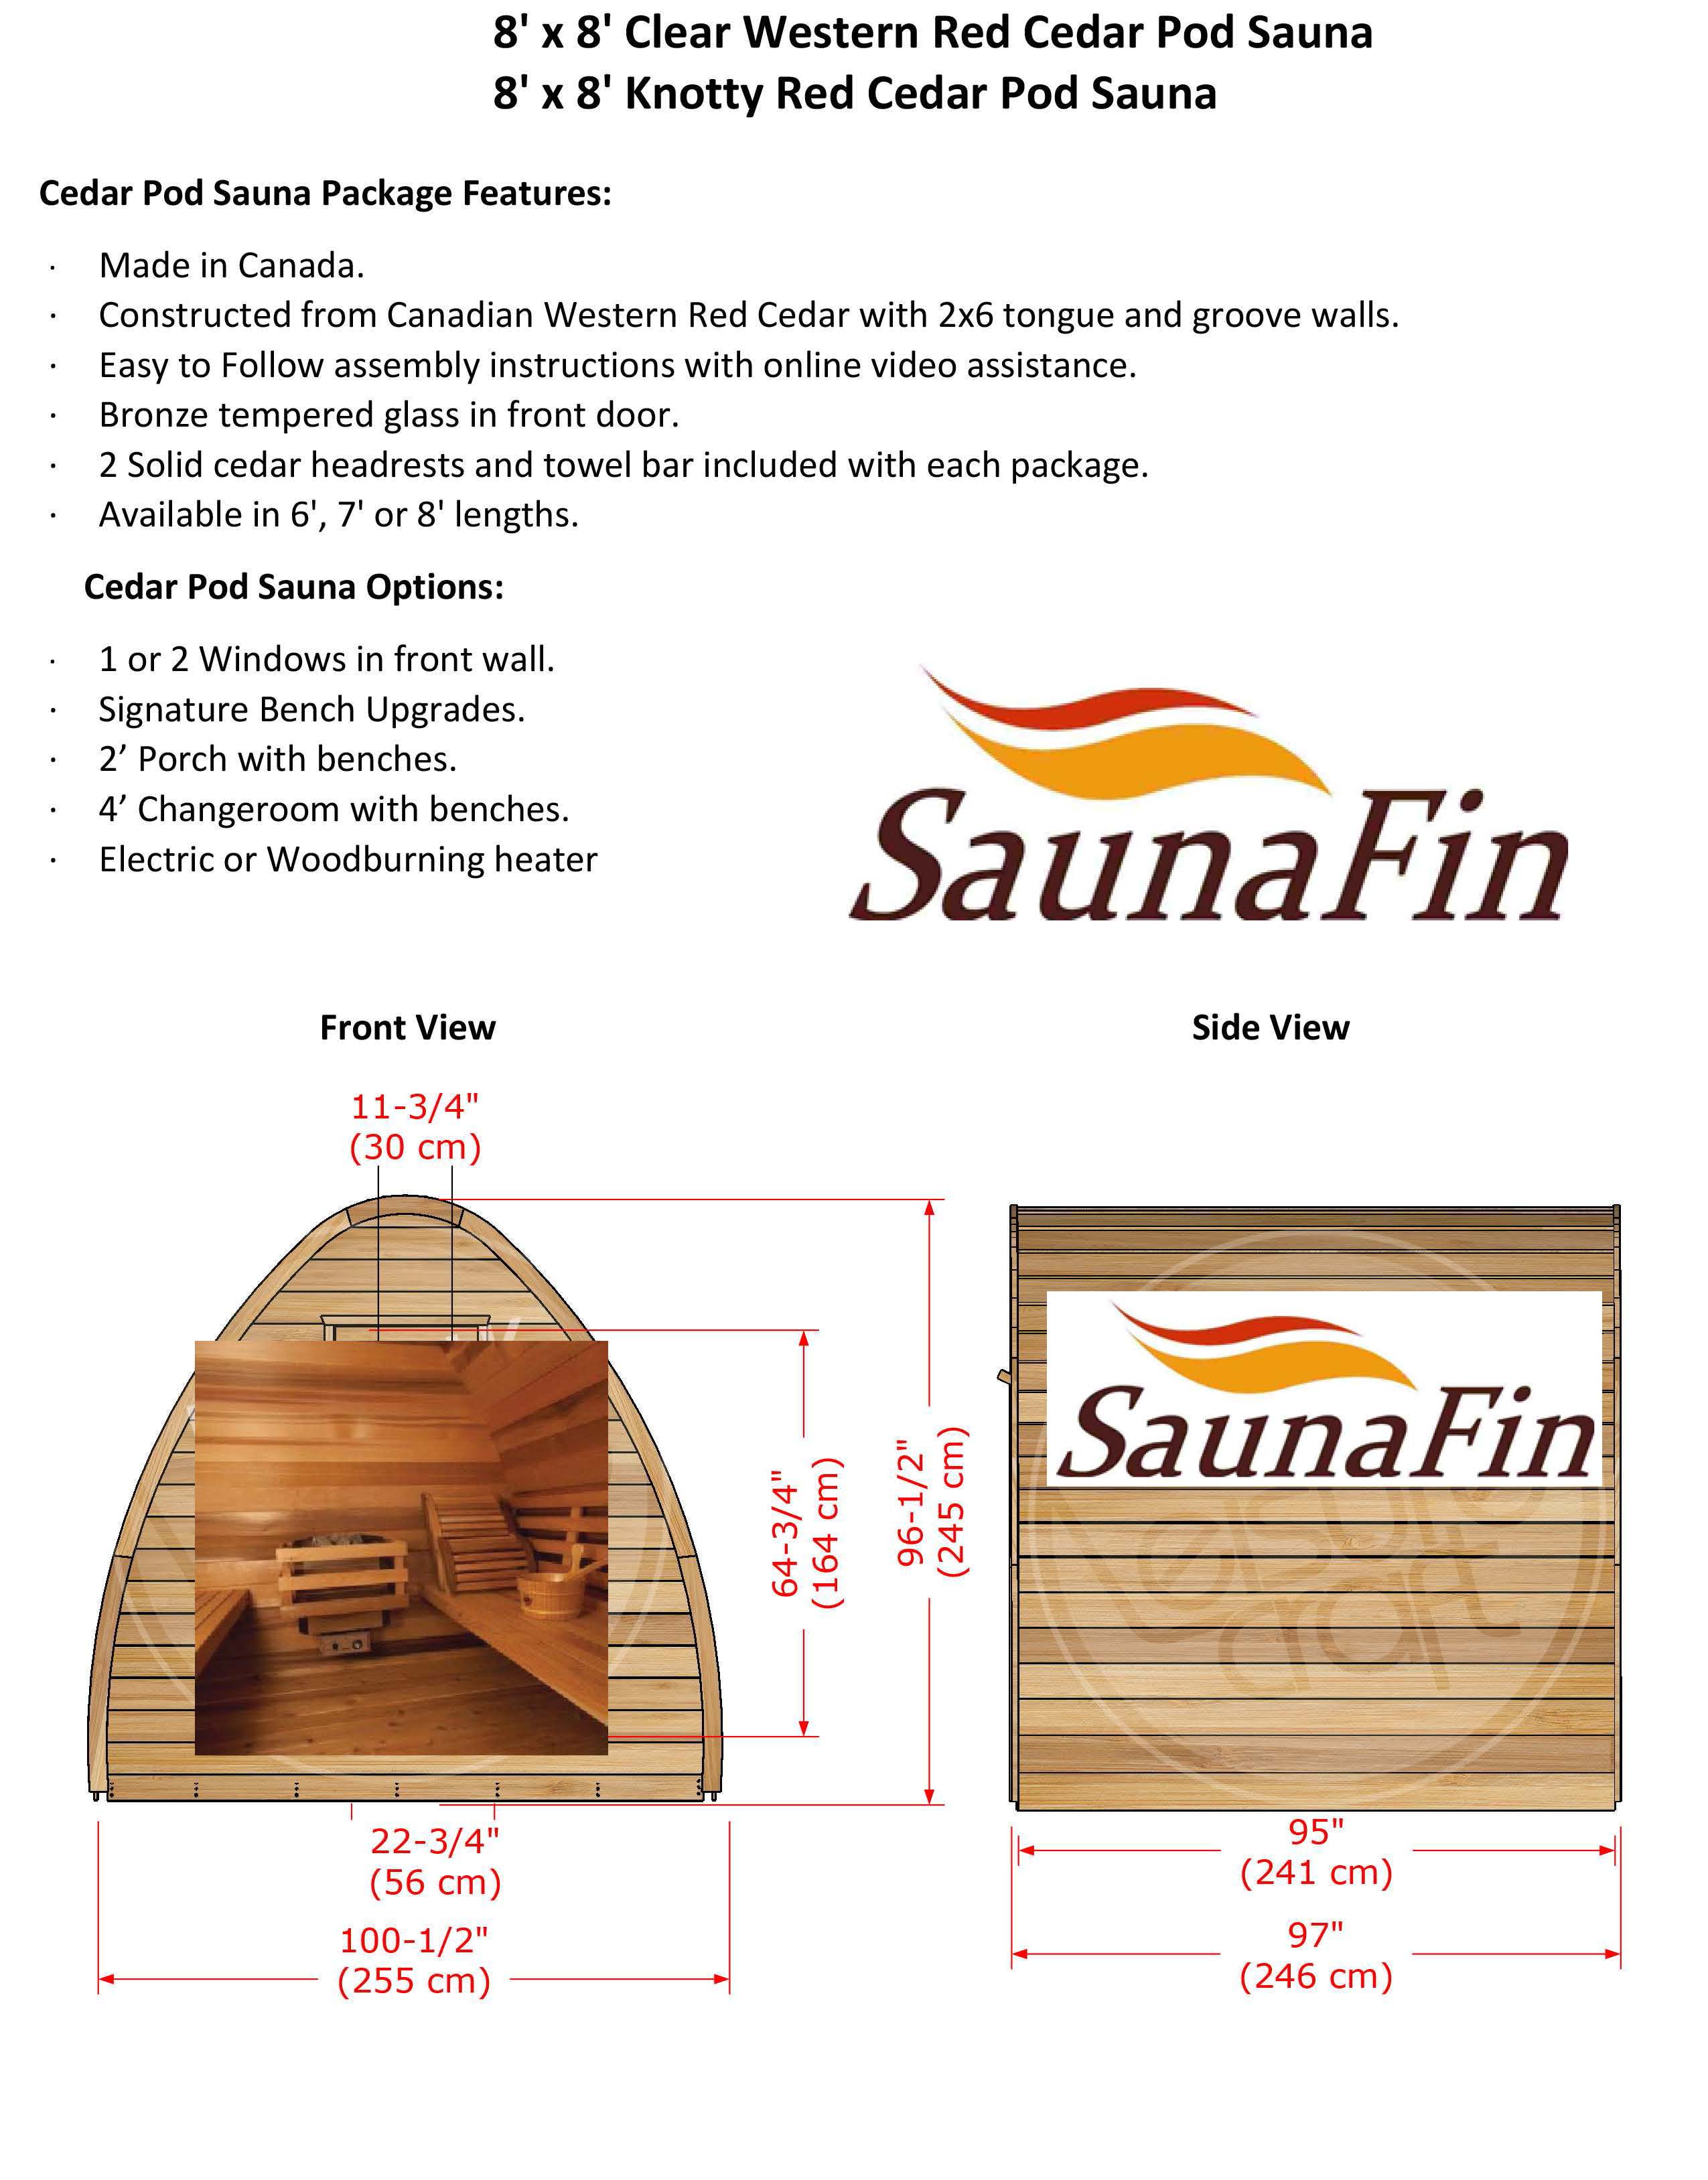 cedar pod sauna layout details